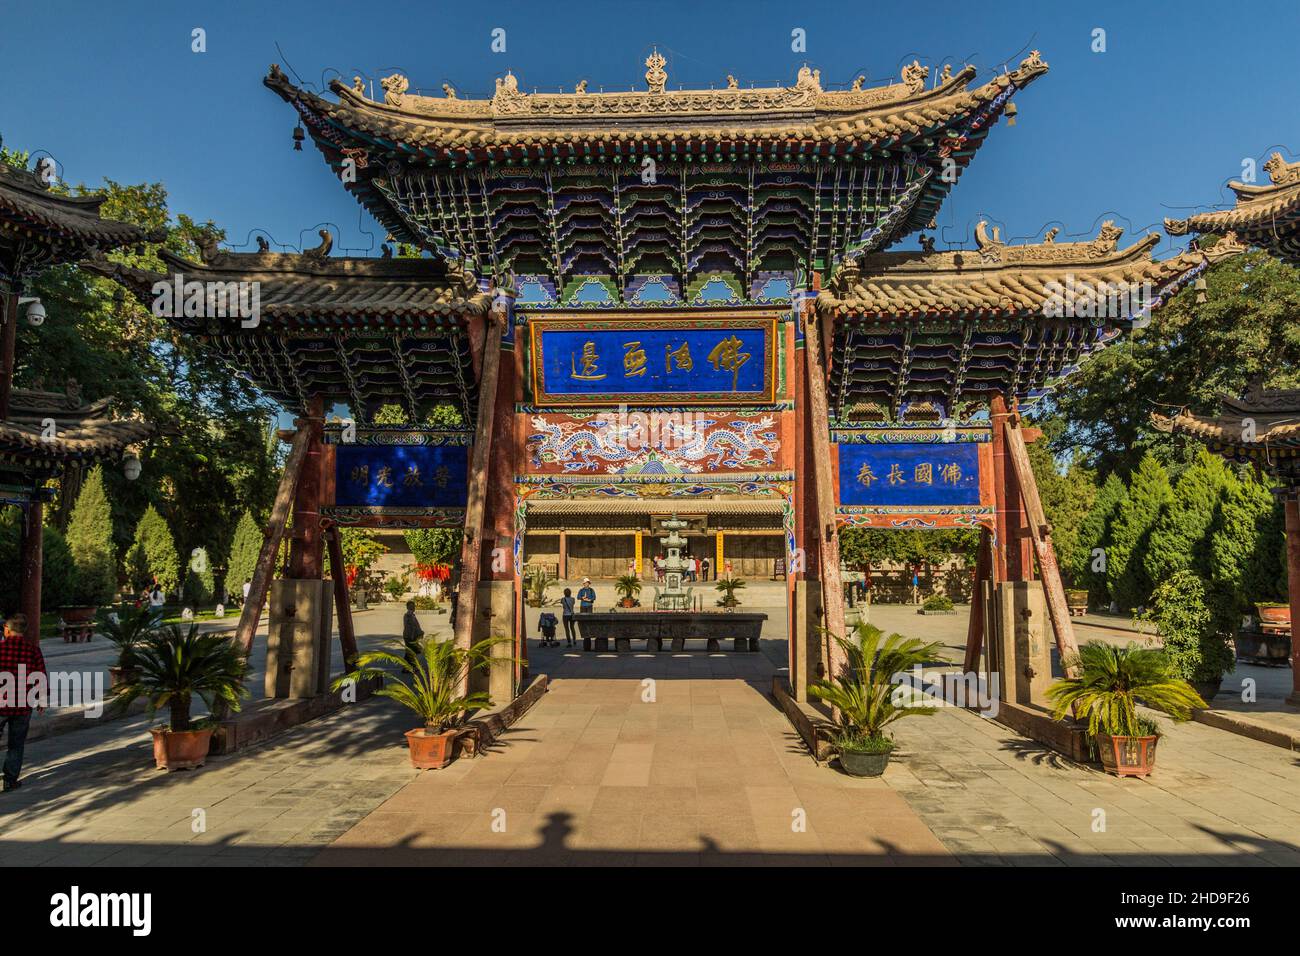 ZHANGYE, CHINA - AUGUST 23, 2018: Archway at Giant Buddha Dafo Temple in Zhangye, Gansu Province, China Stock Photo